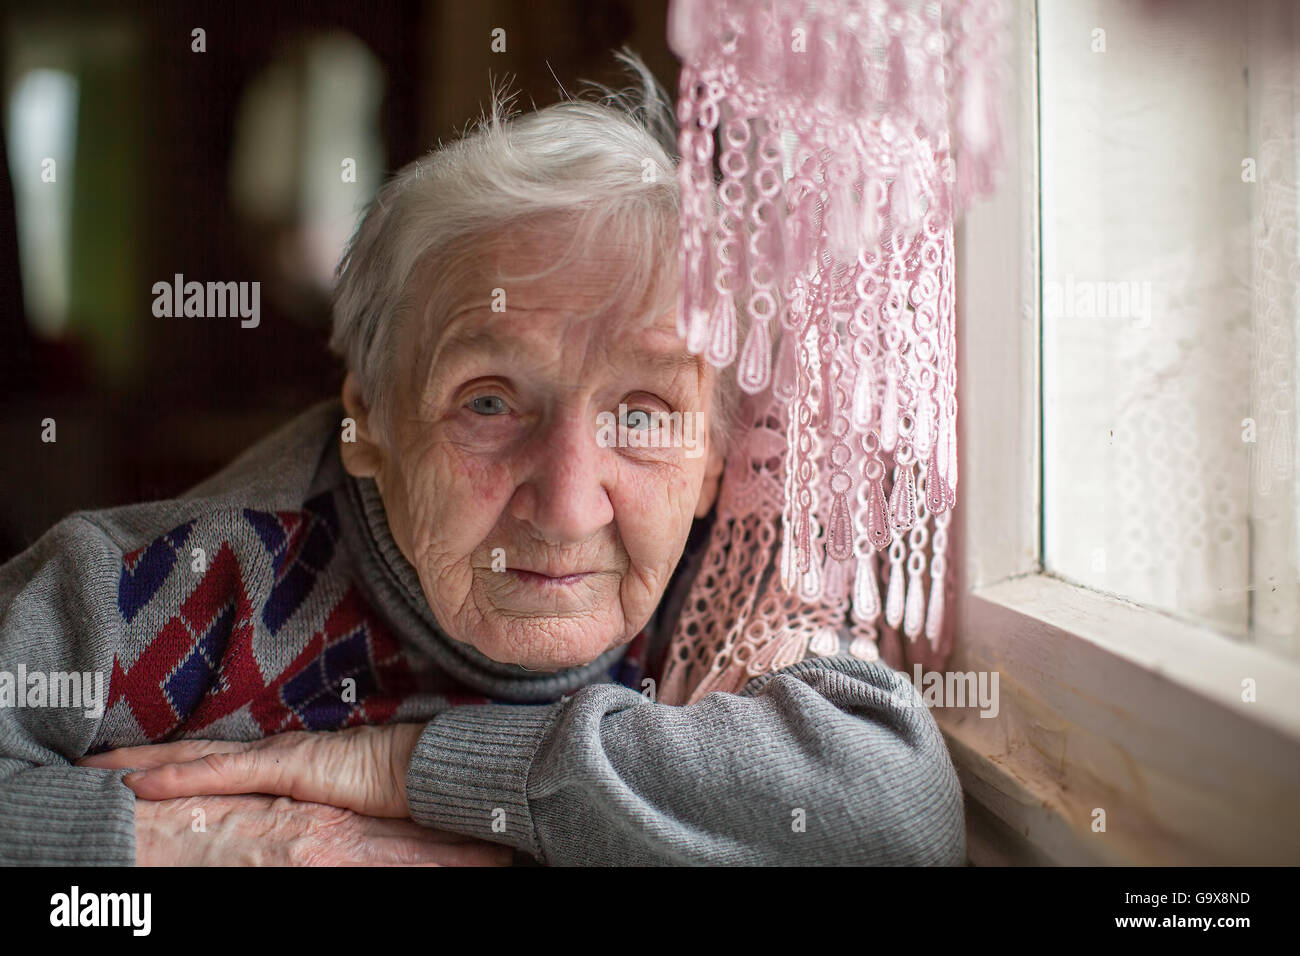 Closeup portrait of an elderly woman. Stock Photo